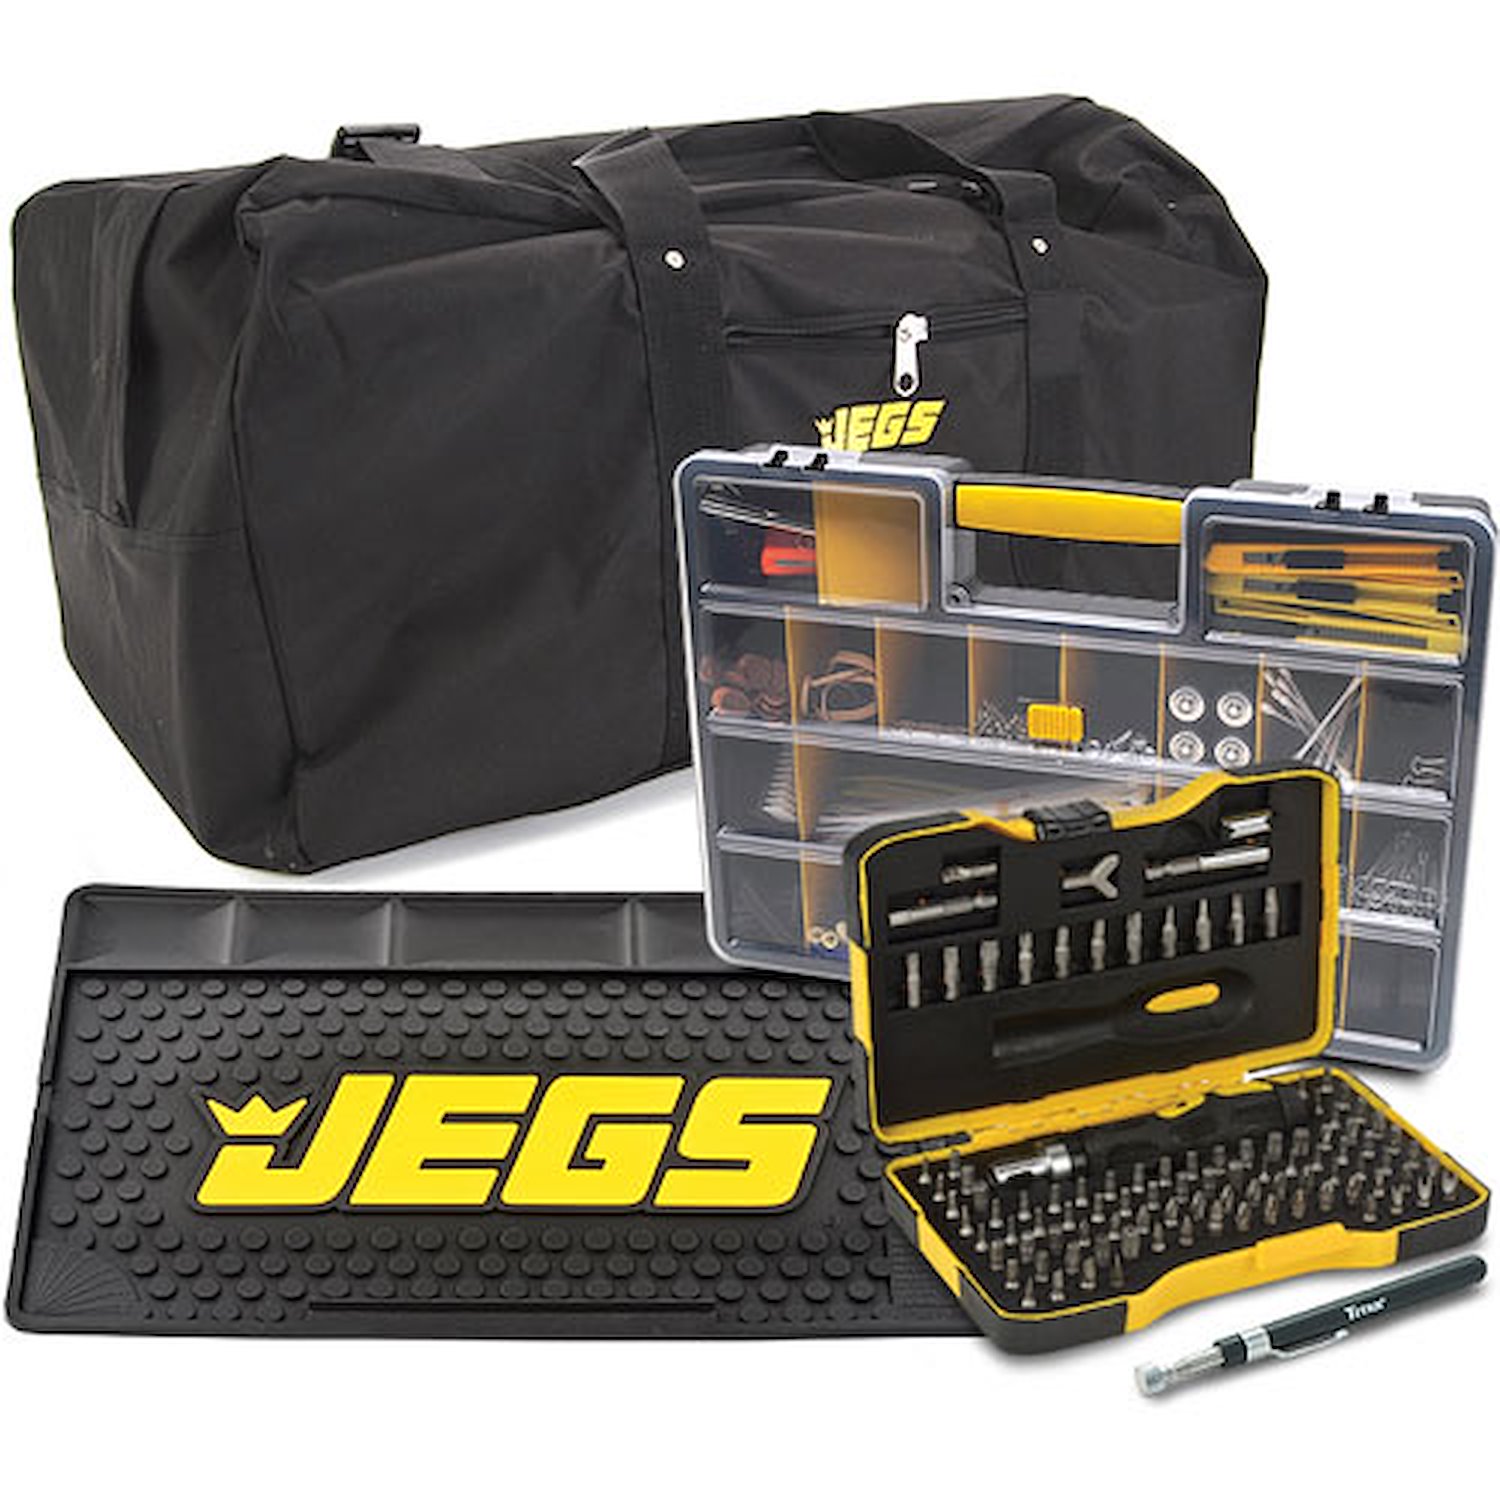 JEGS Gear Bag Kit Includes: (1) Gear Bag